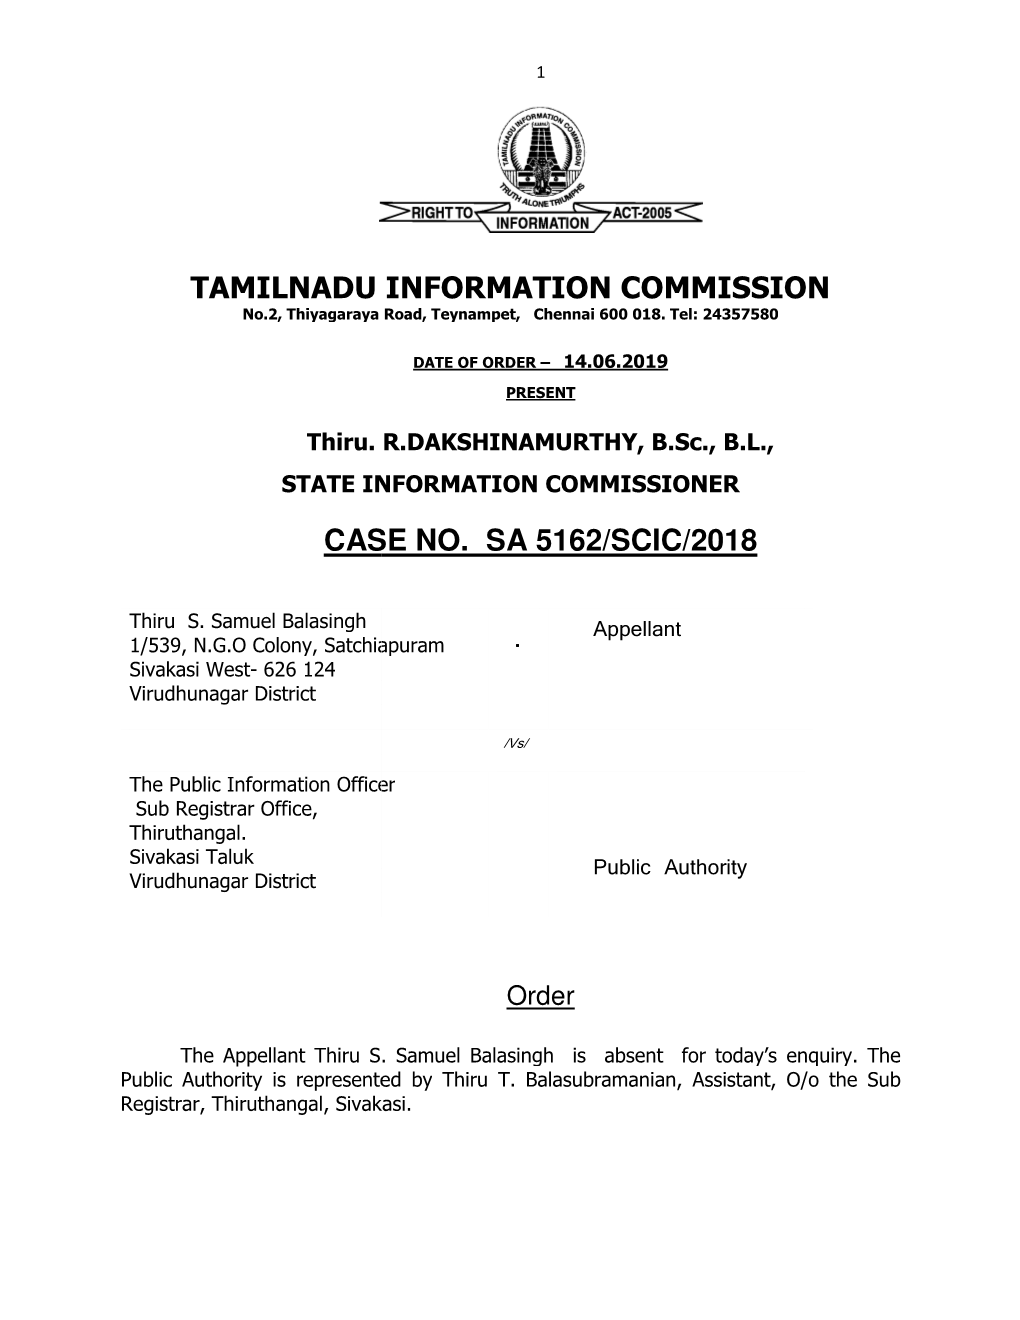 Tamilnadu Informat Case No. Milnadu Information